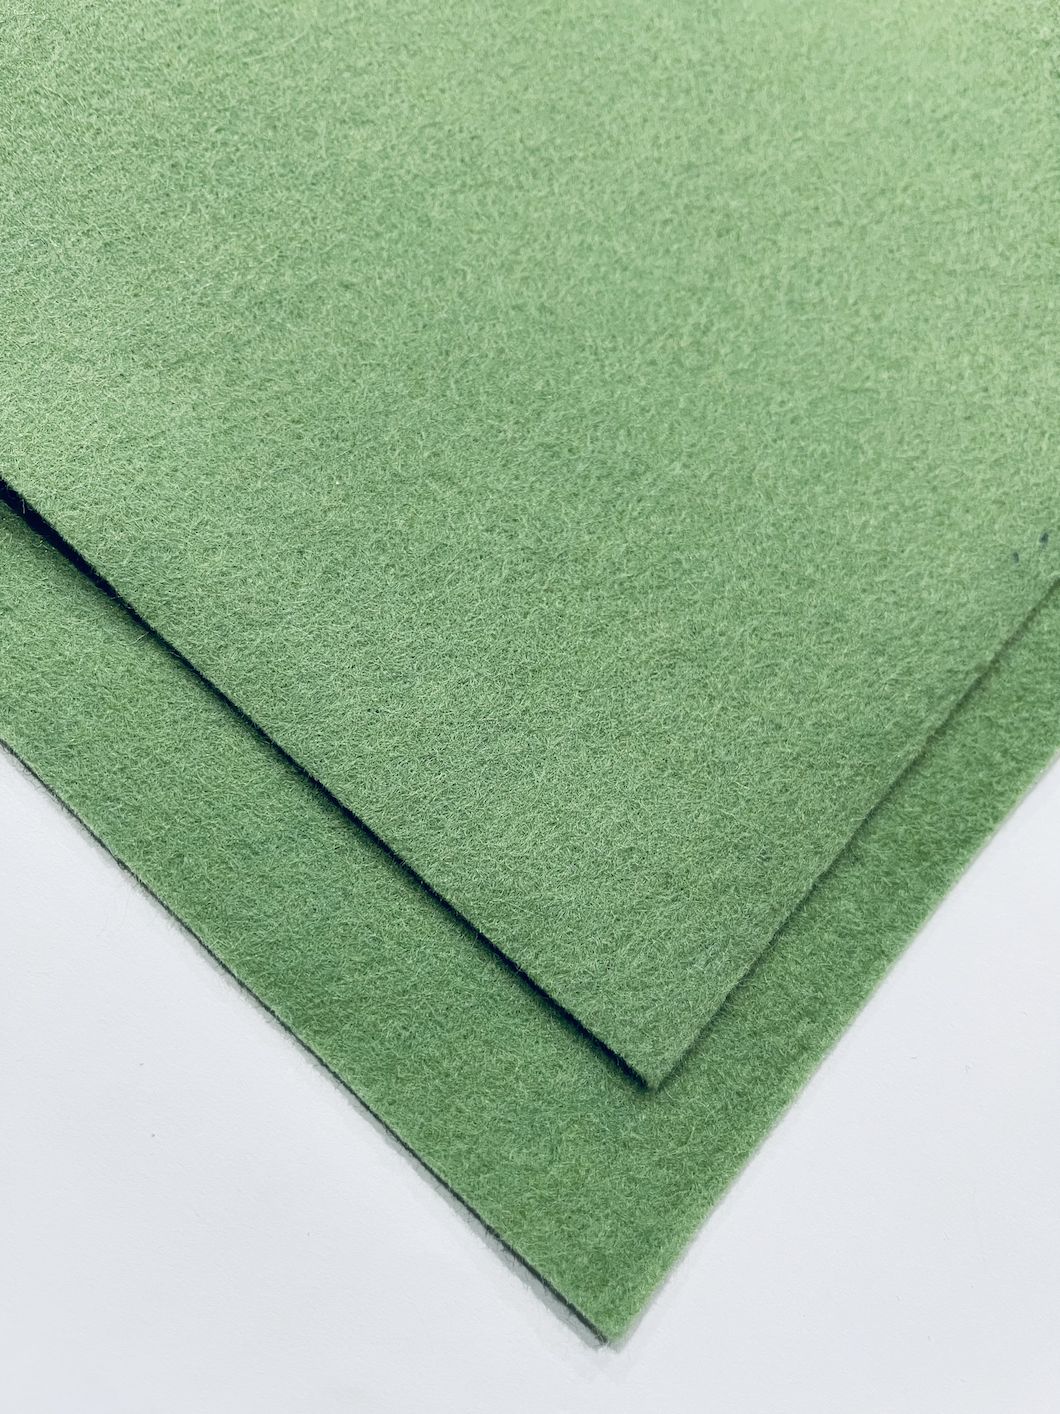 1mm Soft Pastel Green Merino Wool Felt - No. 68 - Pure Wool Felt - 100% Wool Felt By The Metre or Sheet